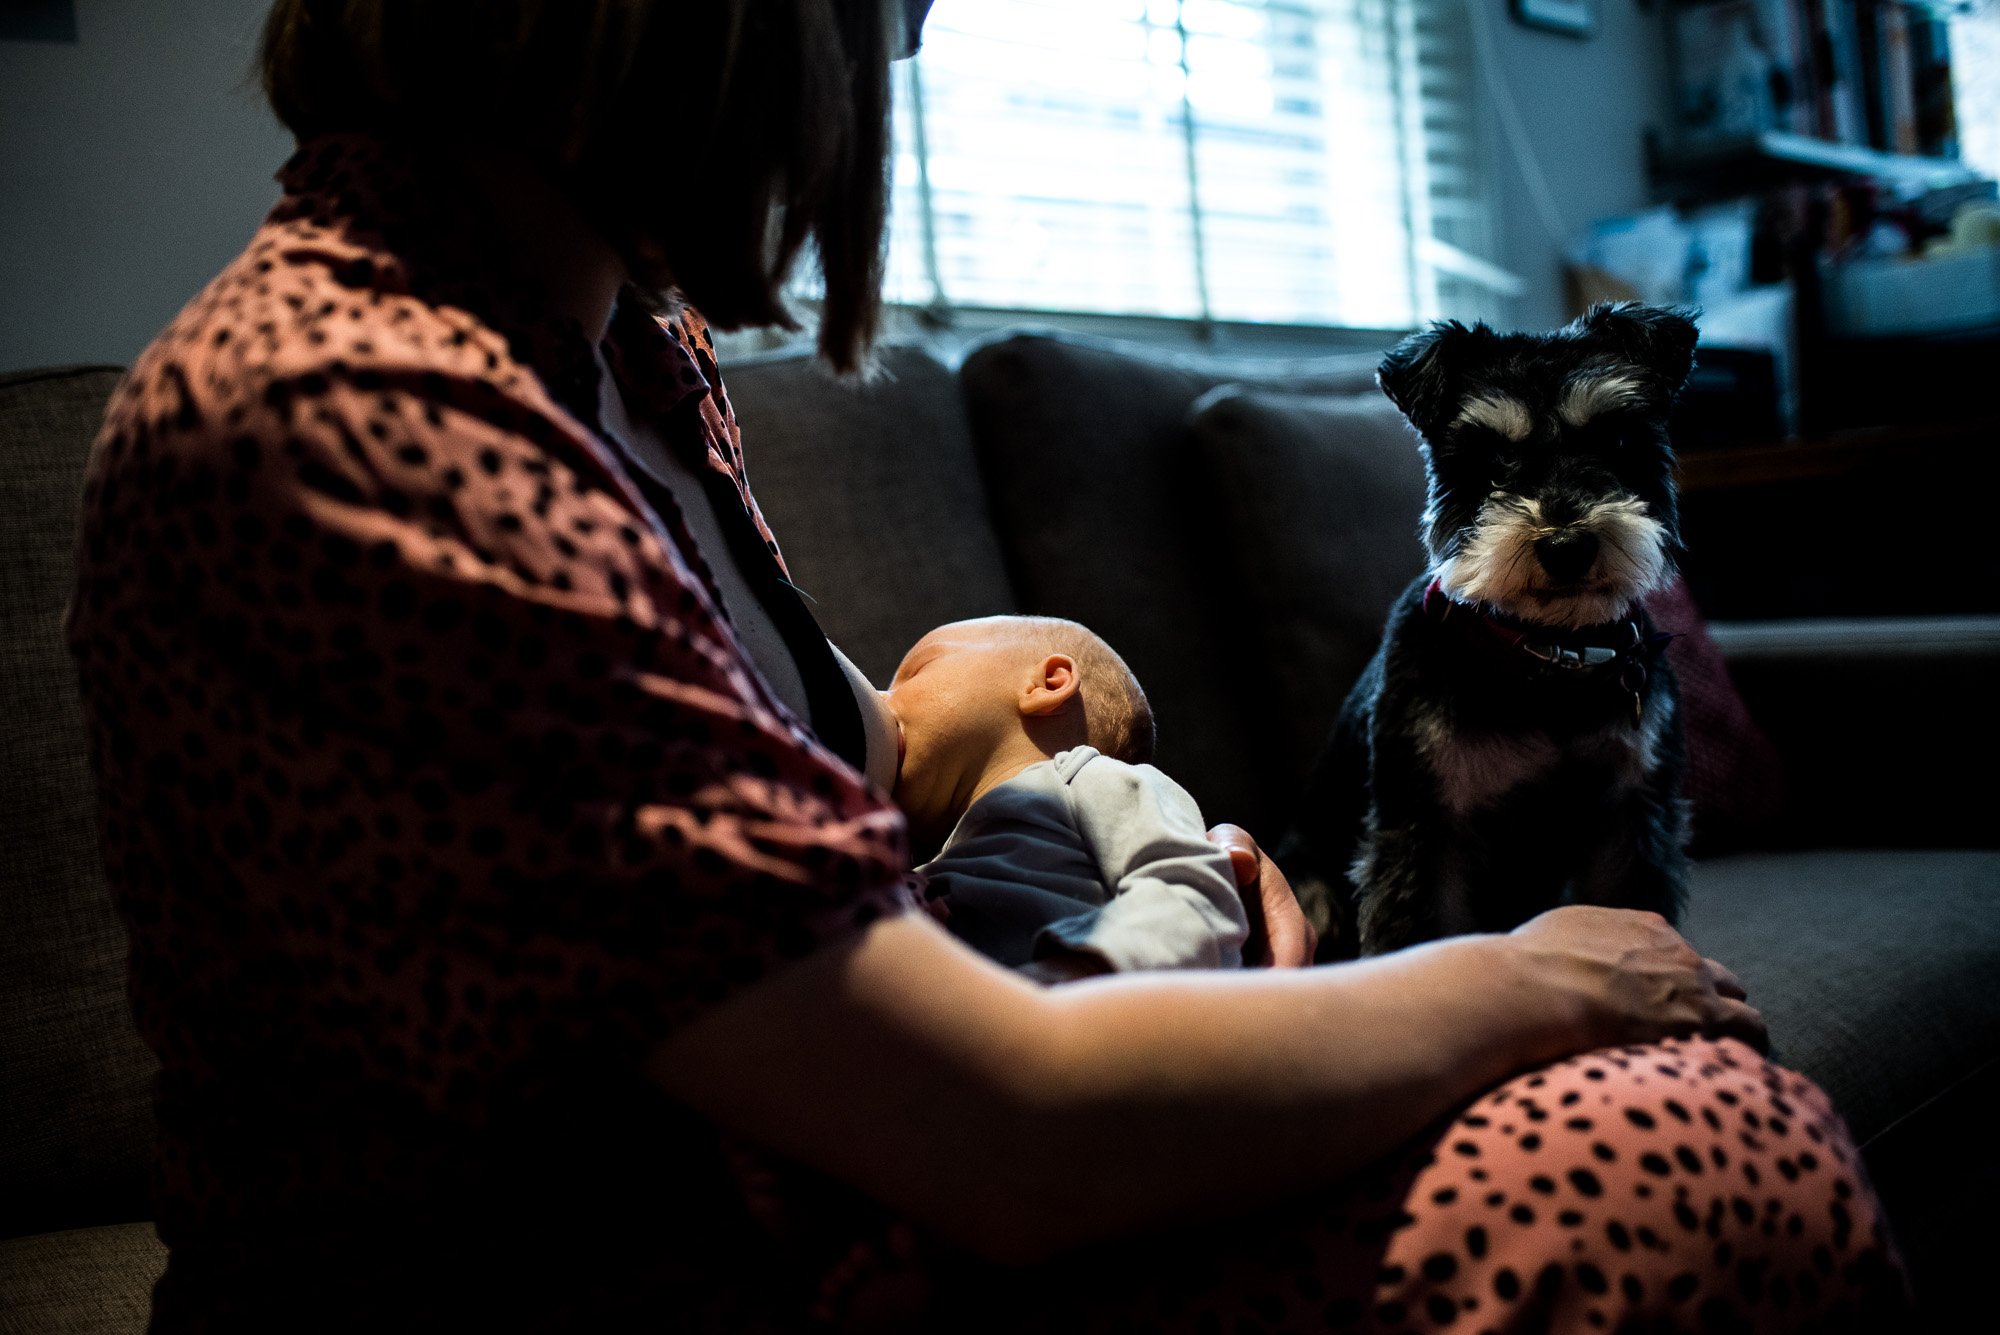 newborn-baby-feeding-mother-dog-family-portrait-at-home-photoshoot-brighton-worthing-london.jpg